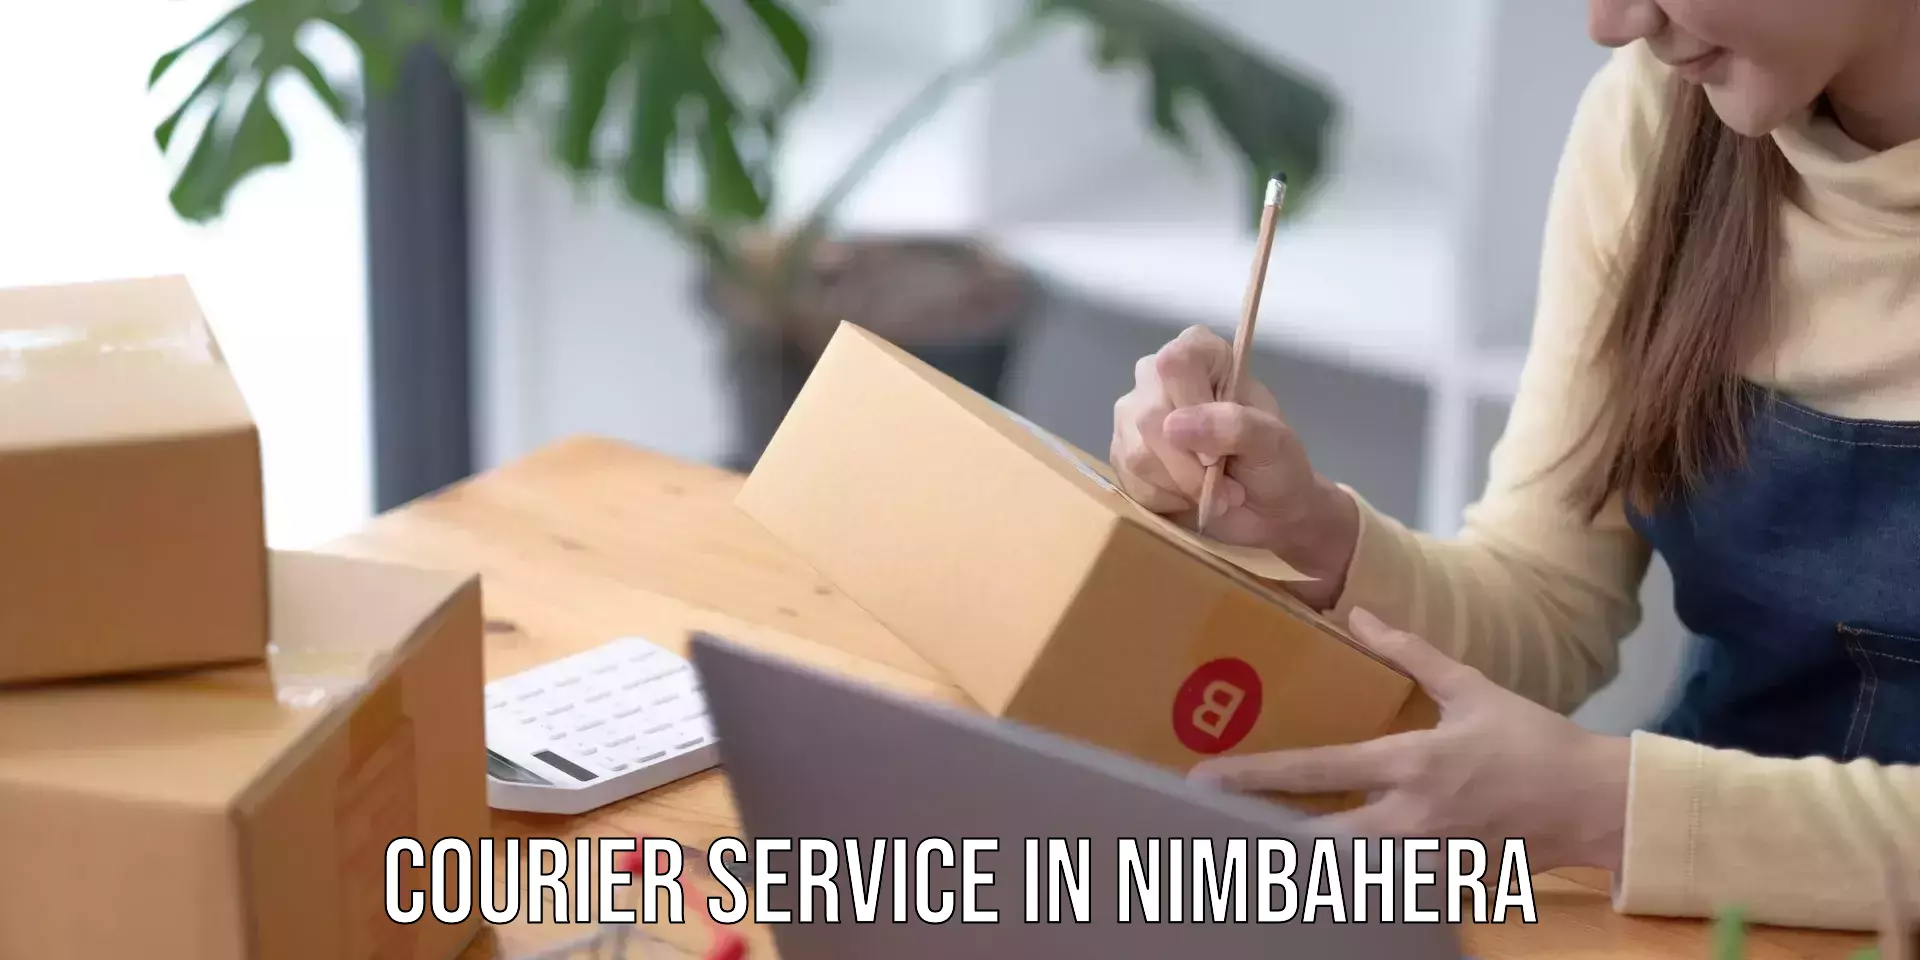 Premium courier services in Nimbahera